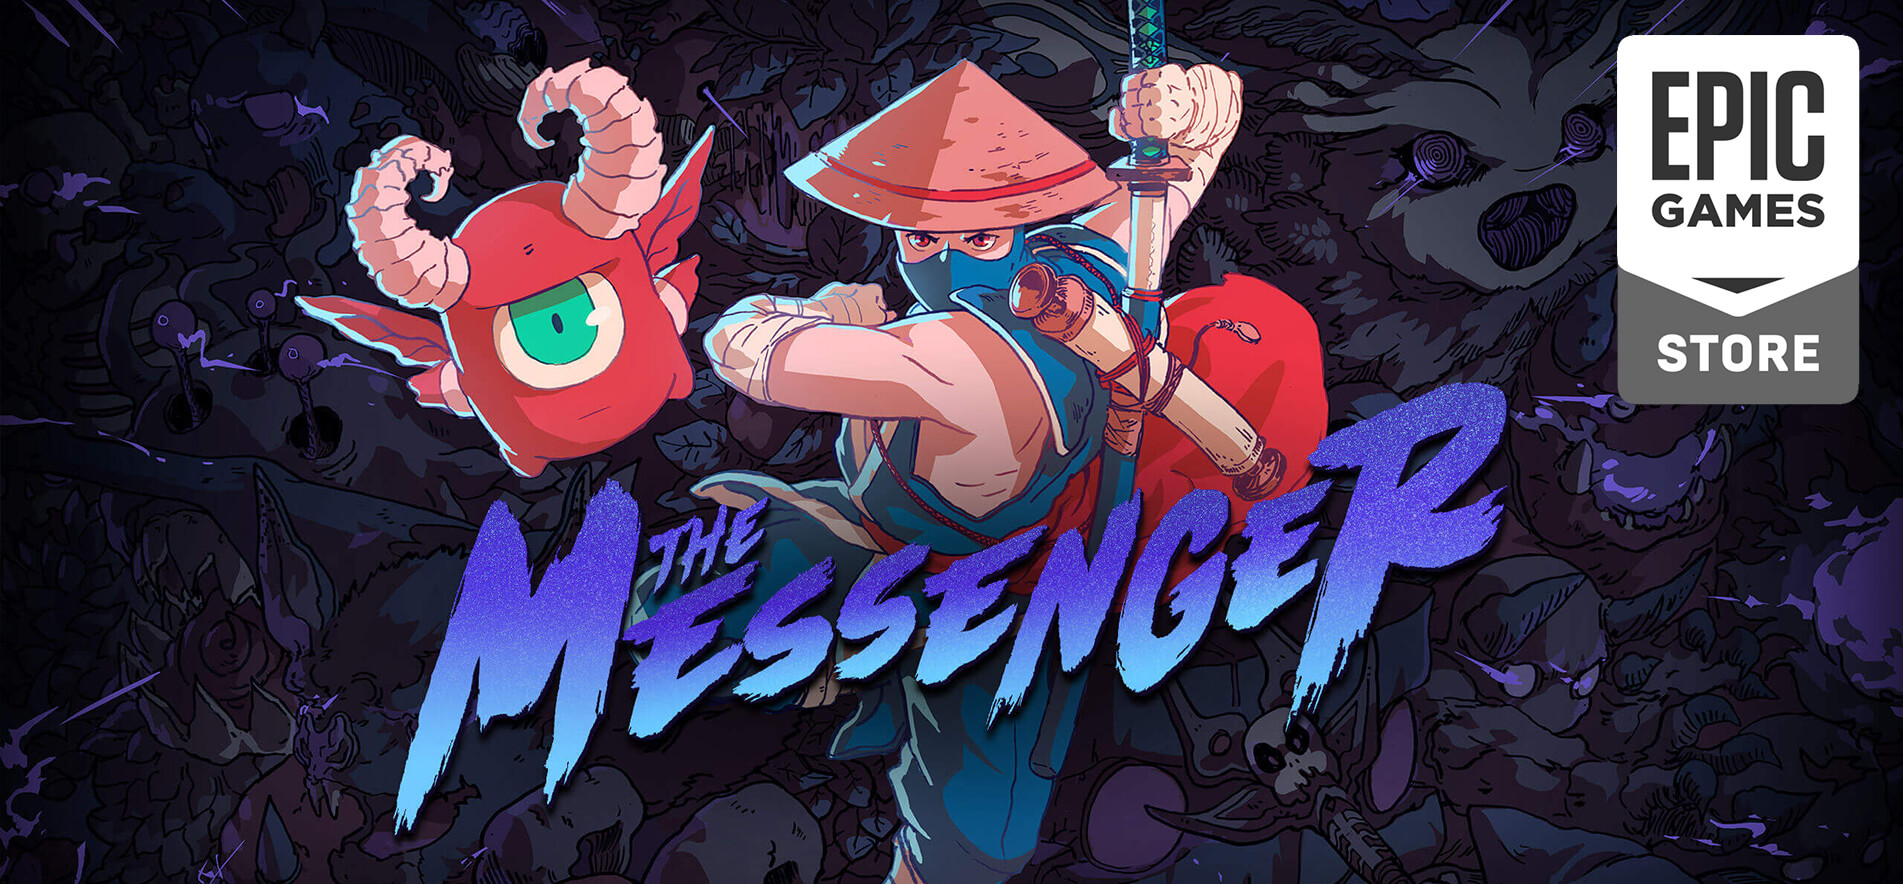 Epic Games Store: началась раздача The Messenger (фото)